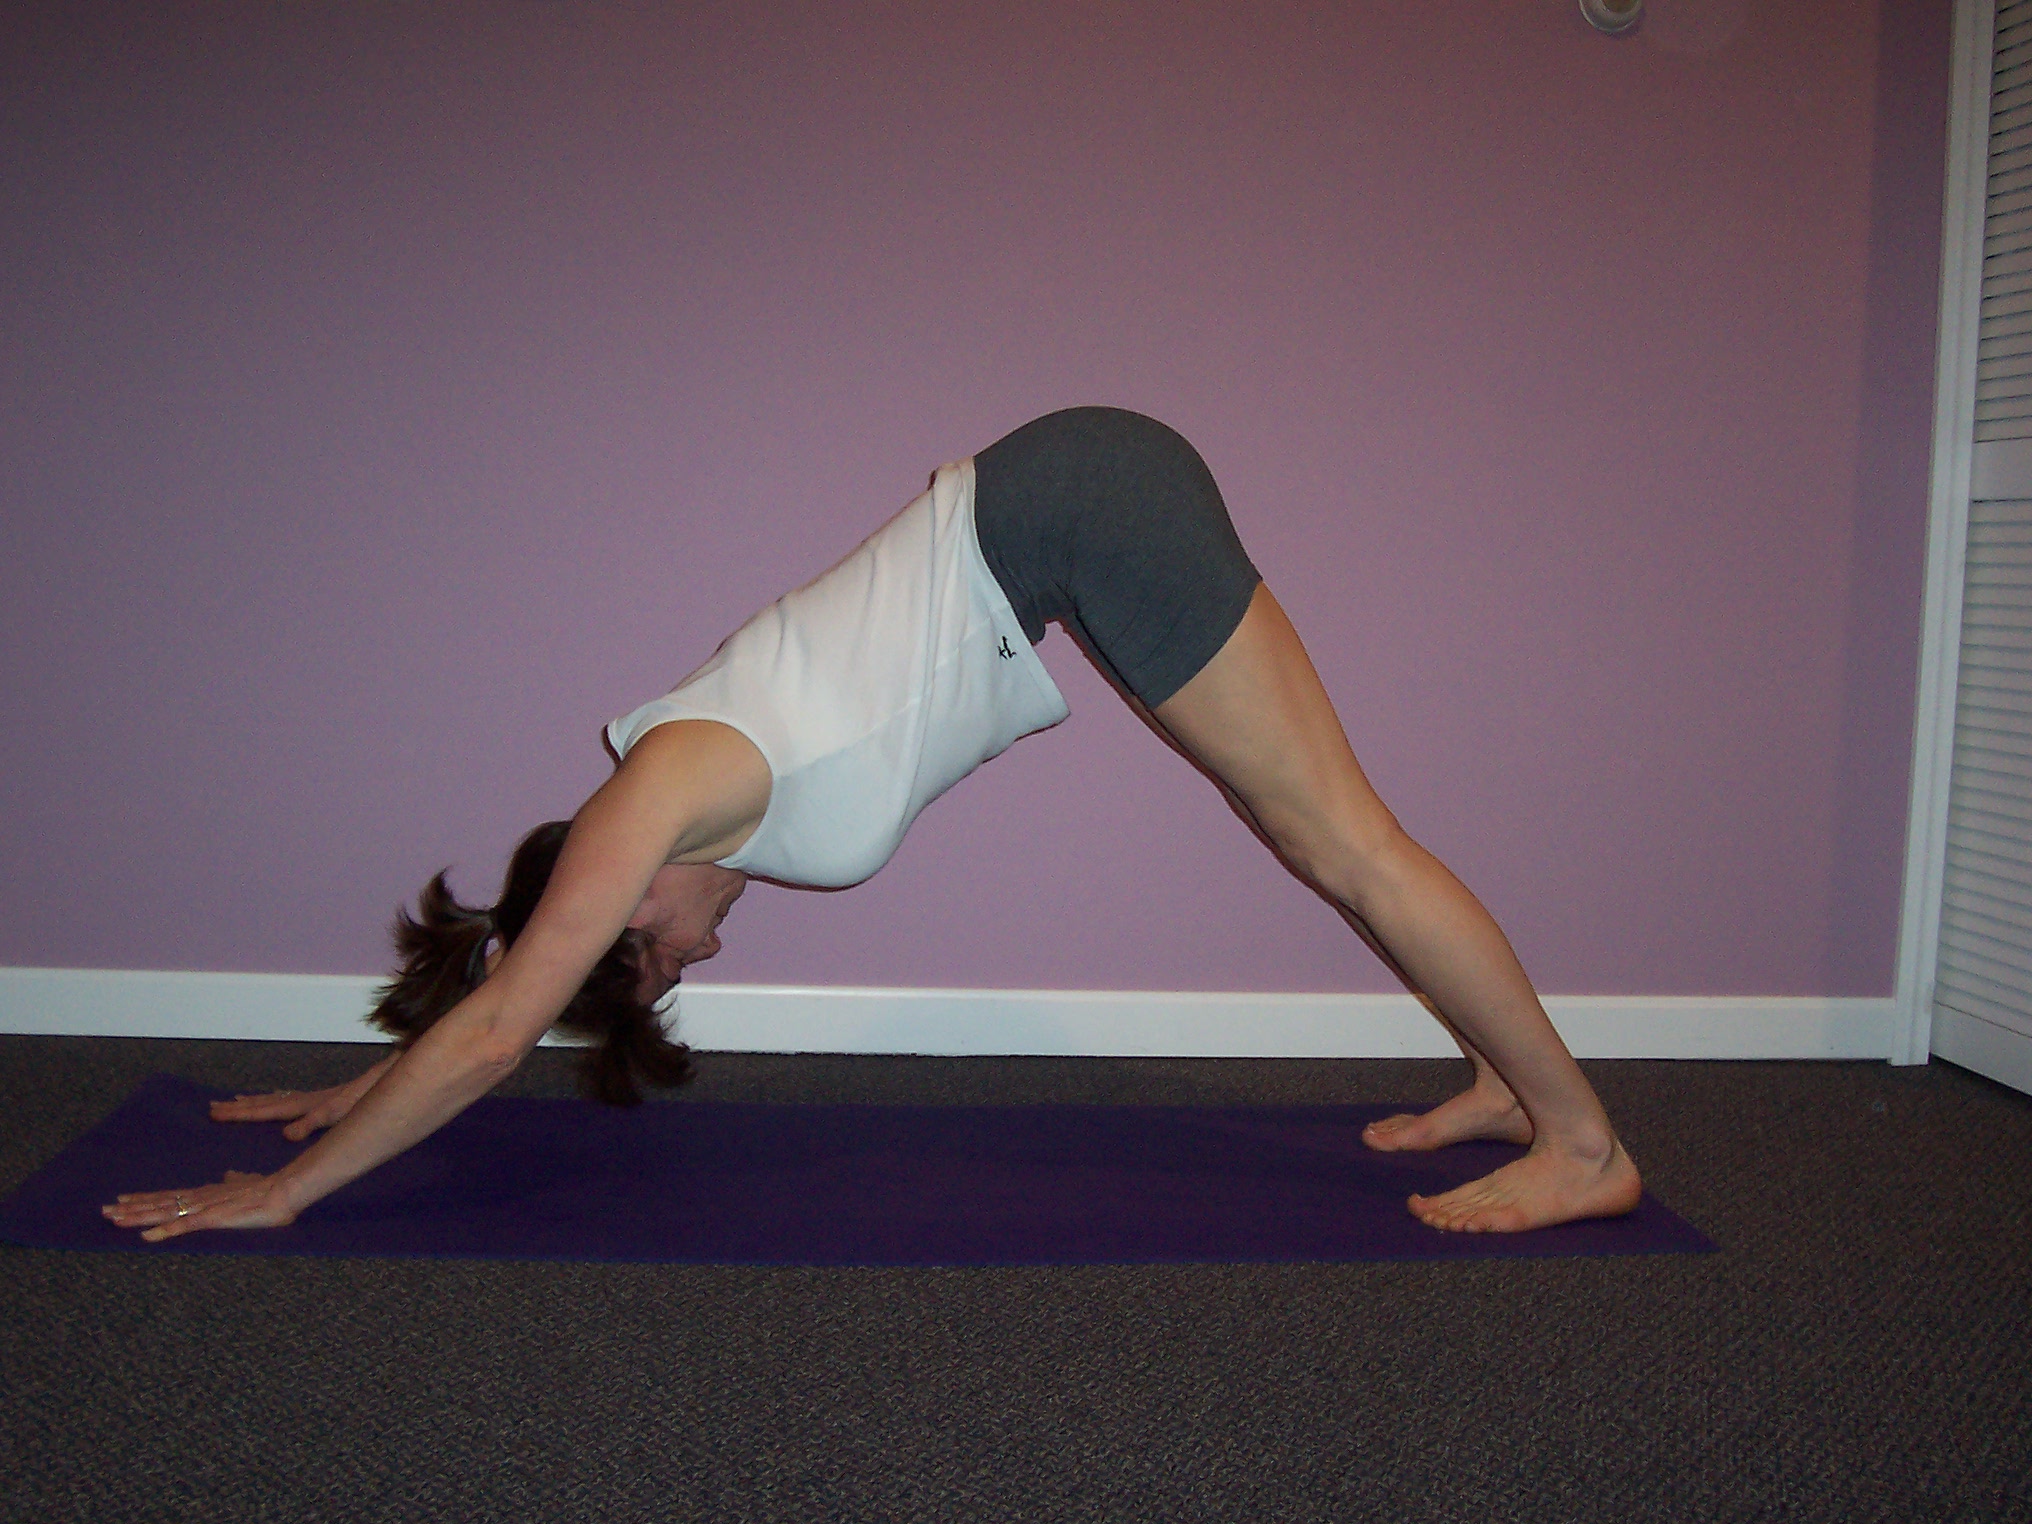 Back Pain While Doing Yoga